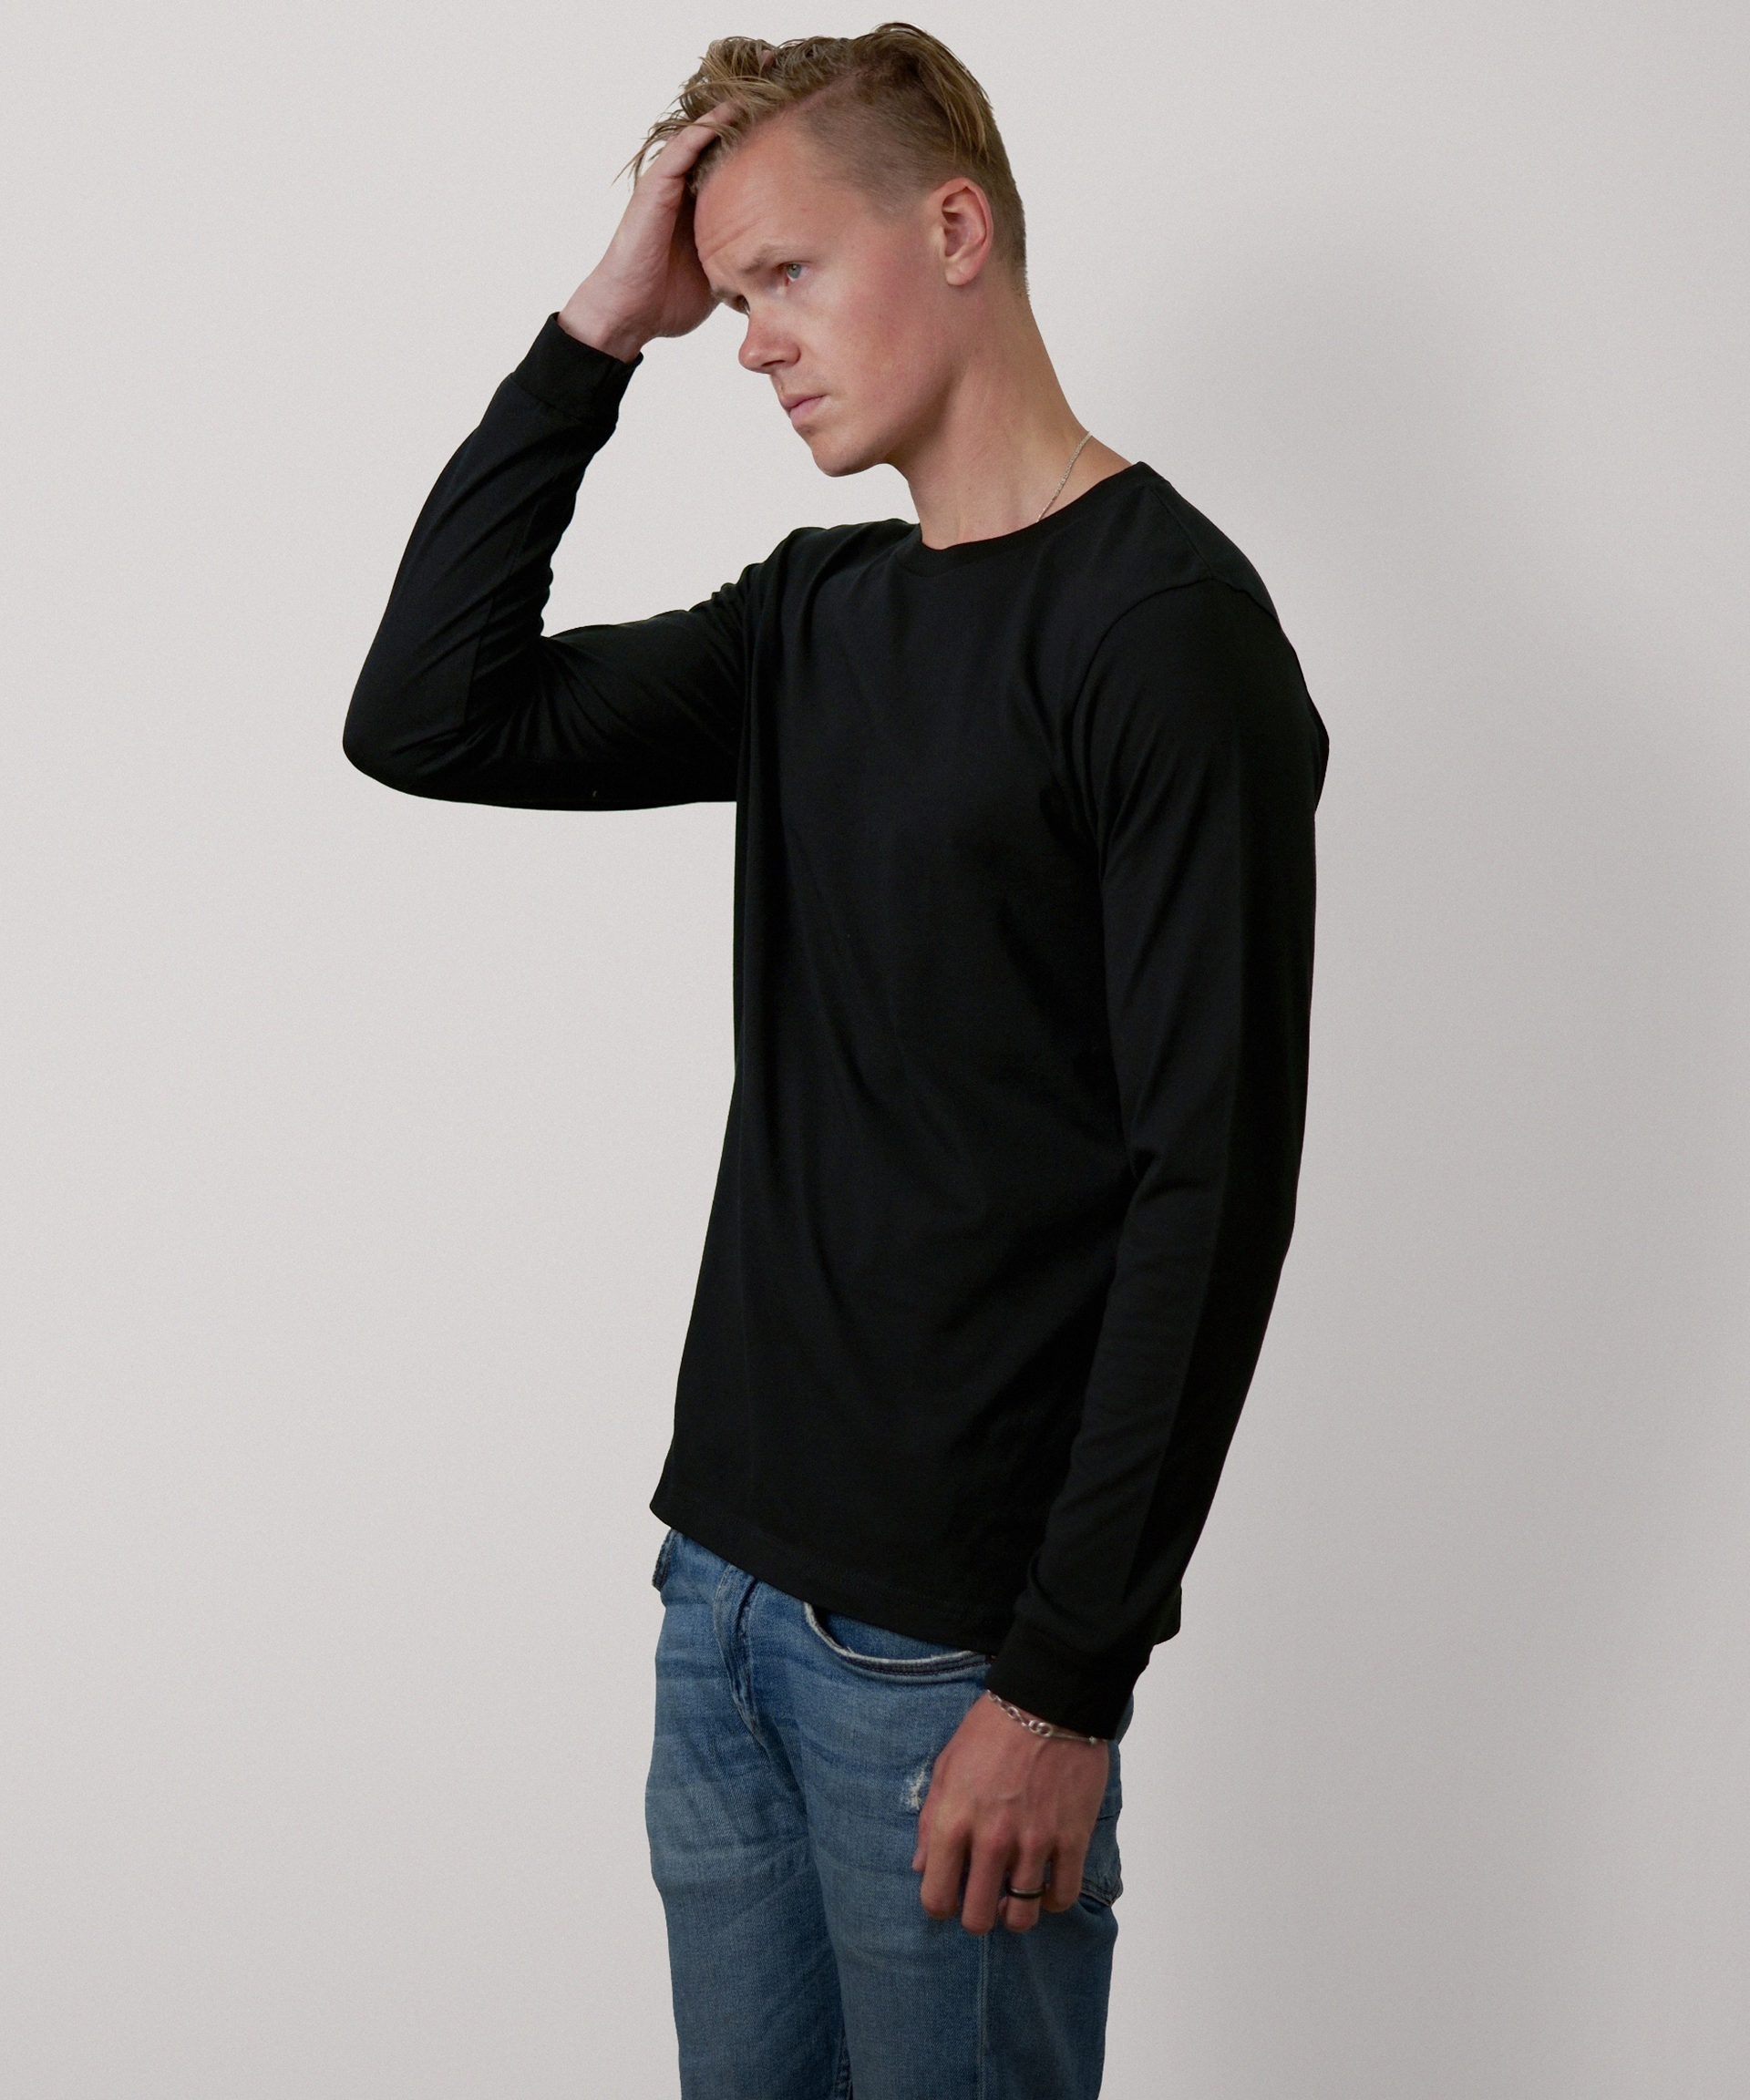 Essential Long Sleeve T-Shirt for Men (Black)